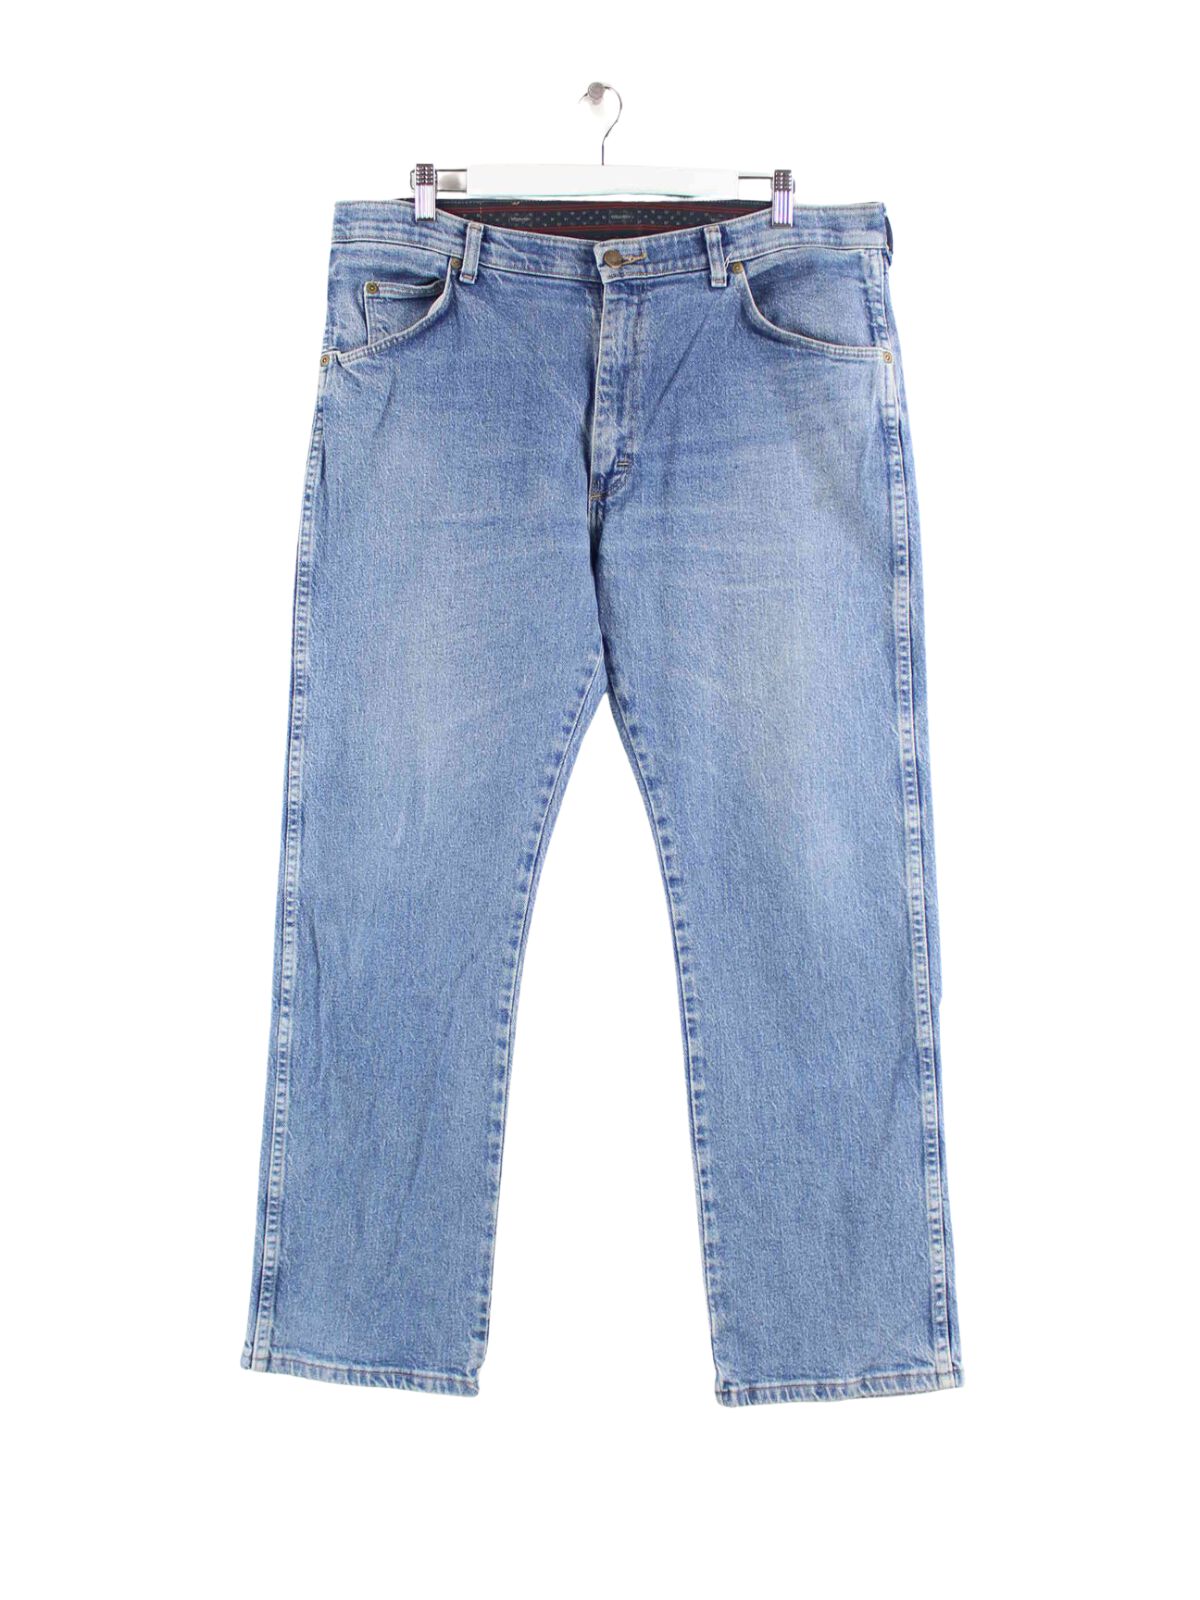 Wrangler Jeans Blau W36 L29 (front image)